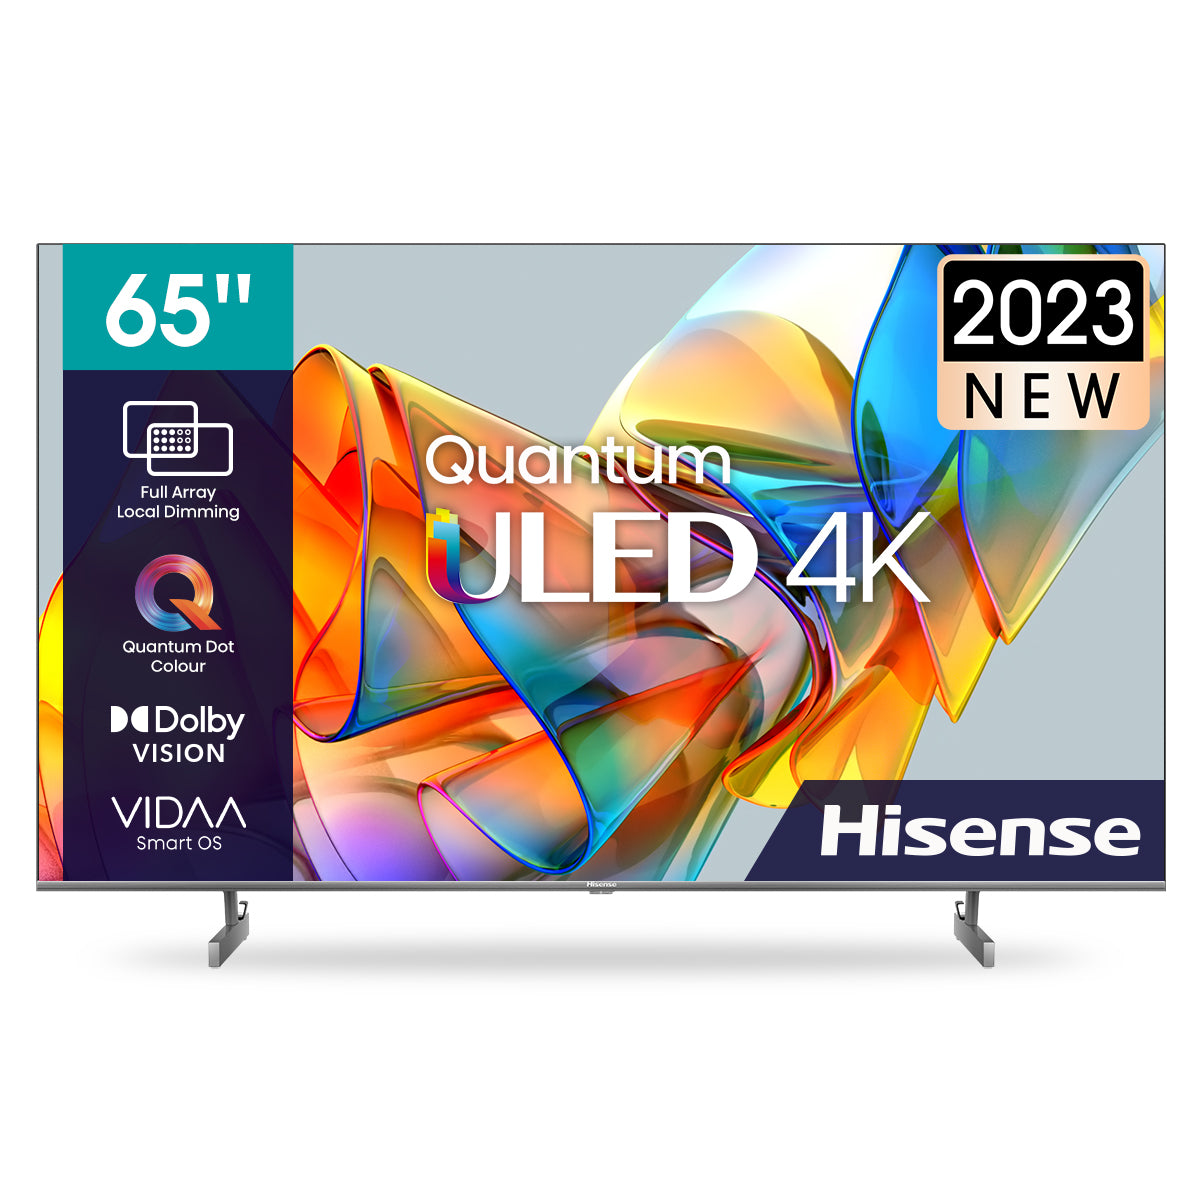 Hisense 65 Inch 4k QLED 65U6K Smart TV With Quantum Dot Colour,BT & Dolby Vision